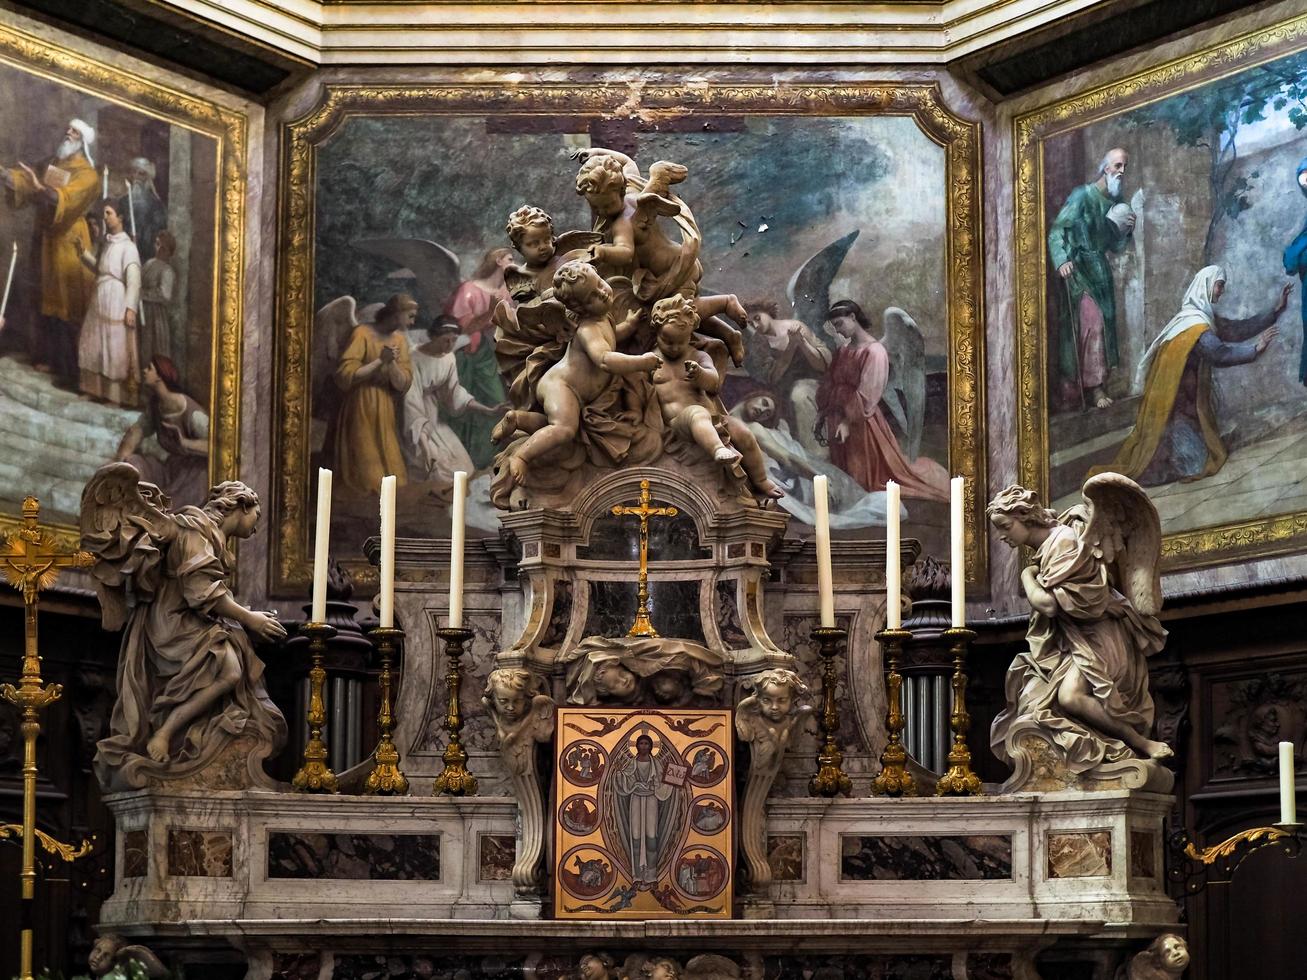 bordeaux, frança, 2016 vista interior do altar da igreja de notre dame em bordeaux foto